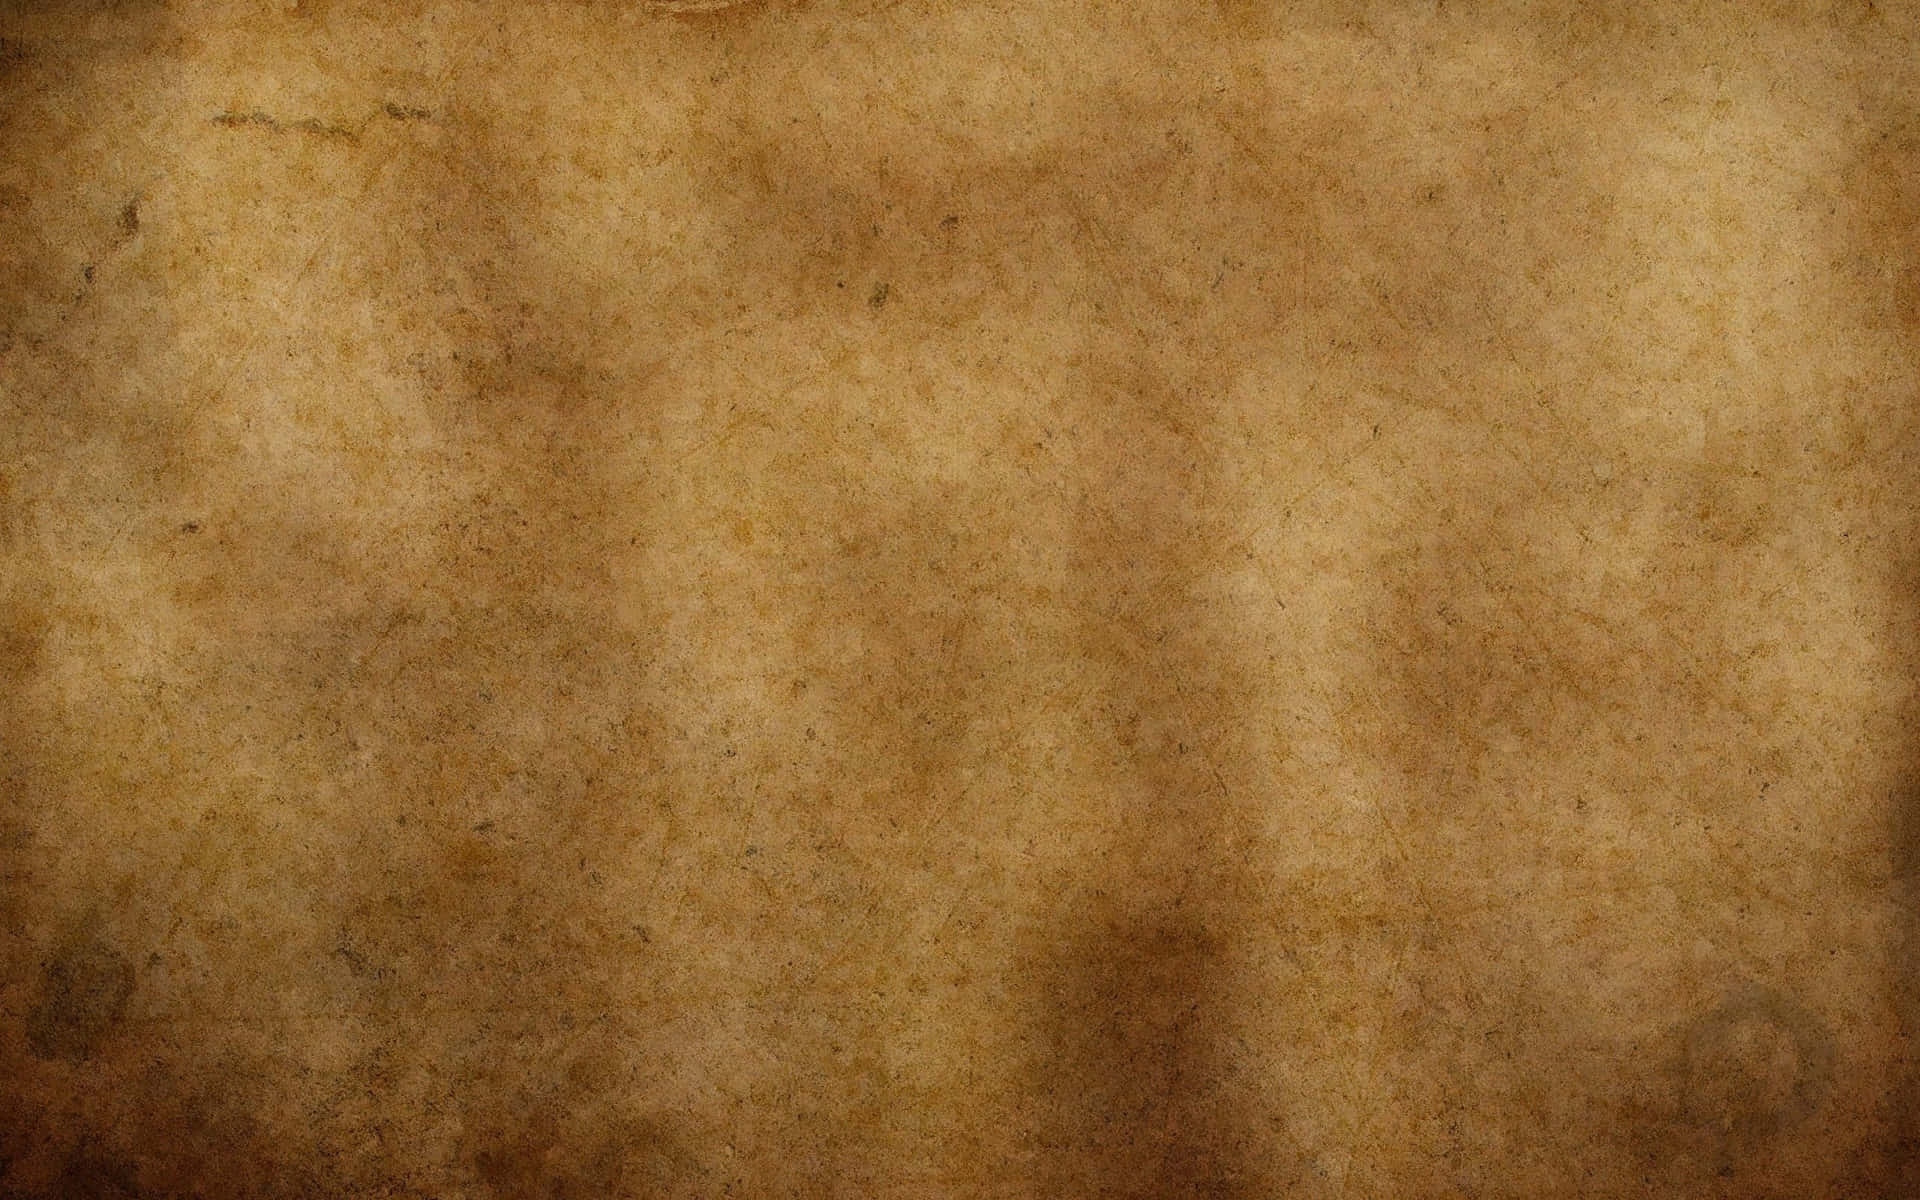 Textured Brown Paper Background